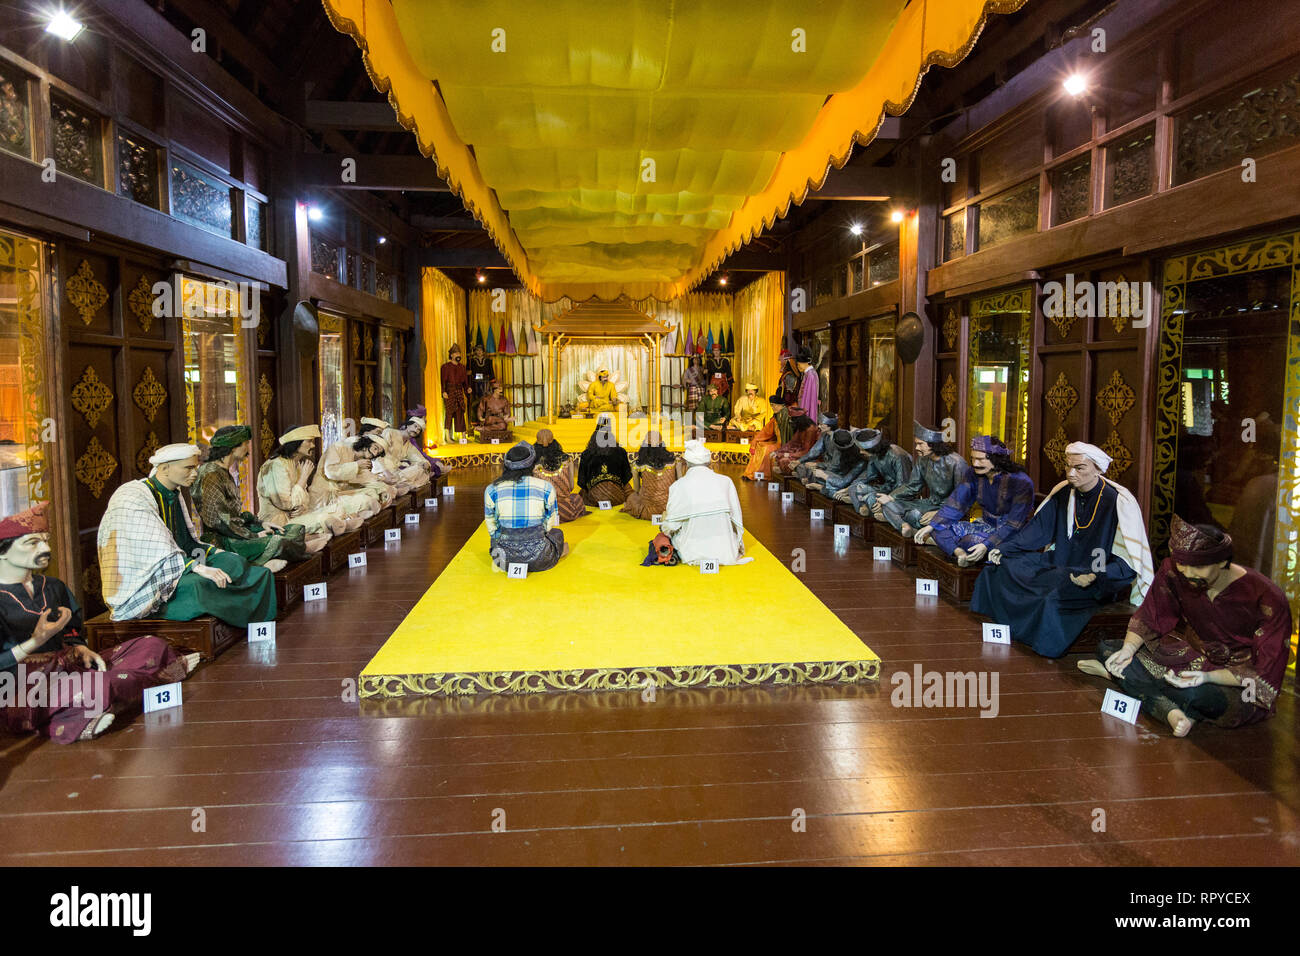 Audience Chamber in the Sultan's Palace Museum, Istana Kesultanan, Melaka, Malaysia. Stock Photo